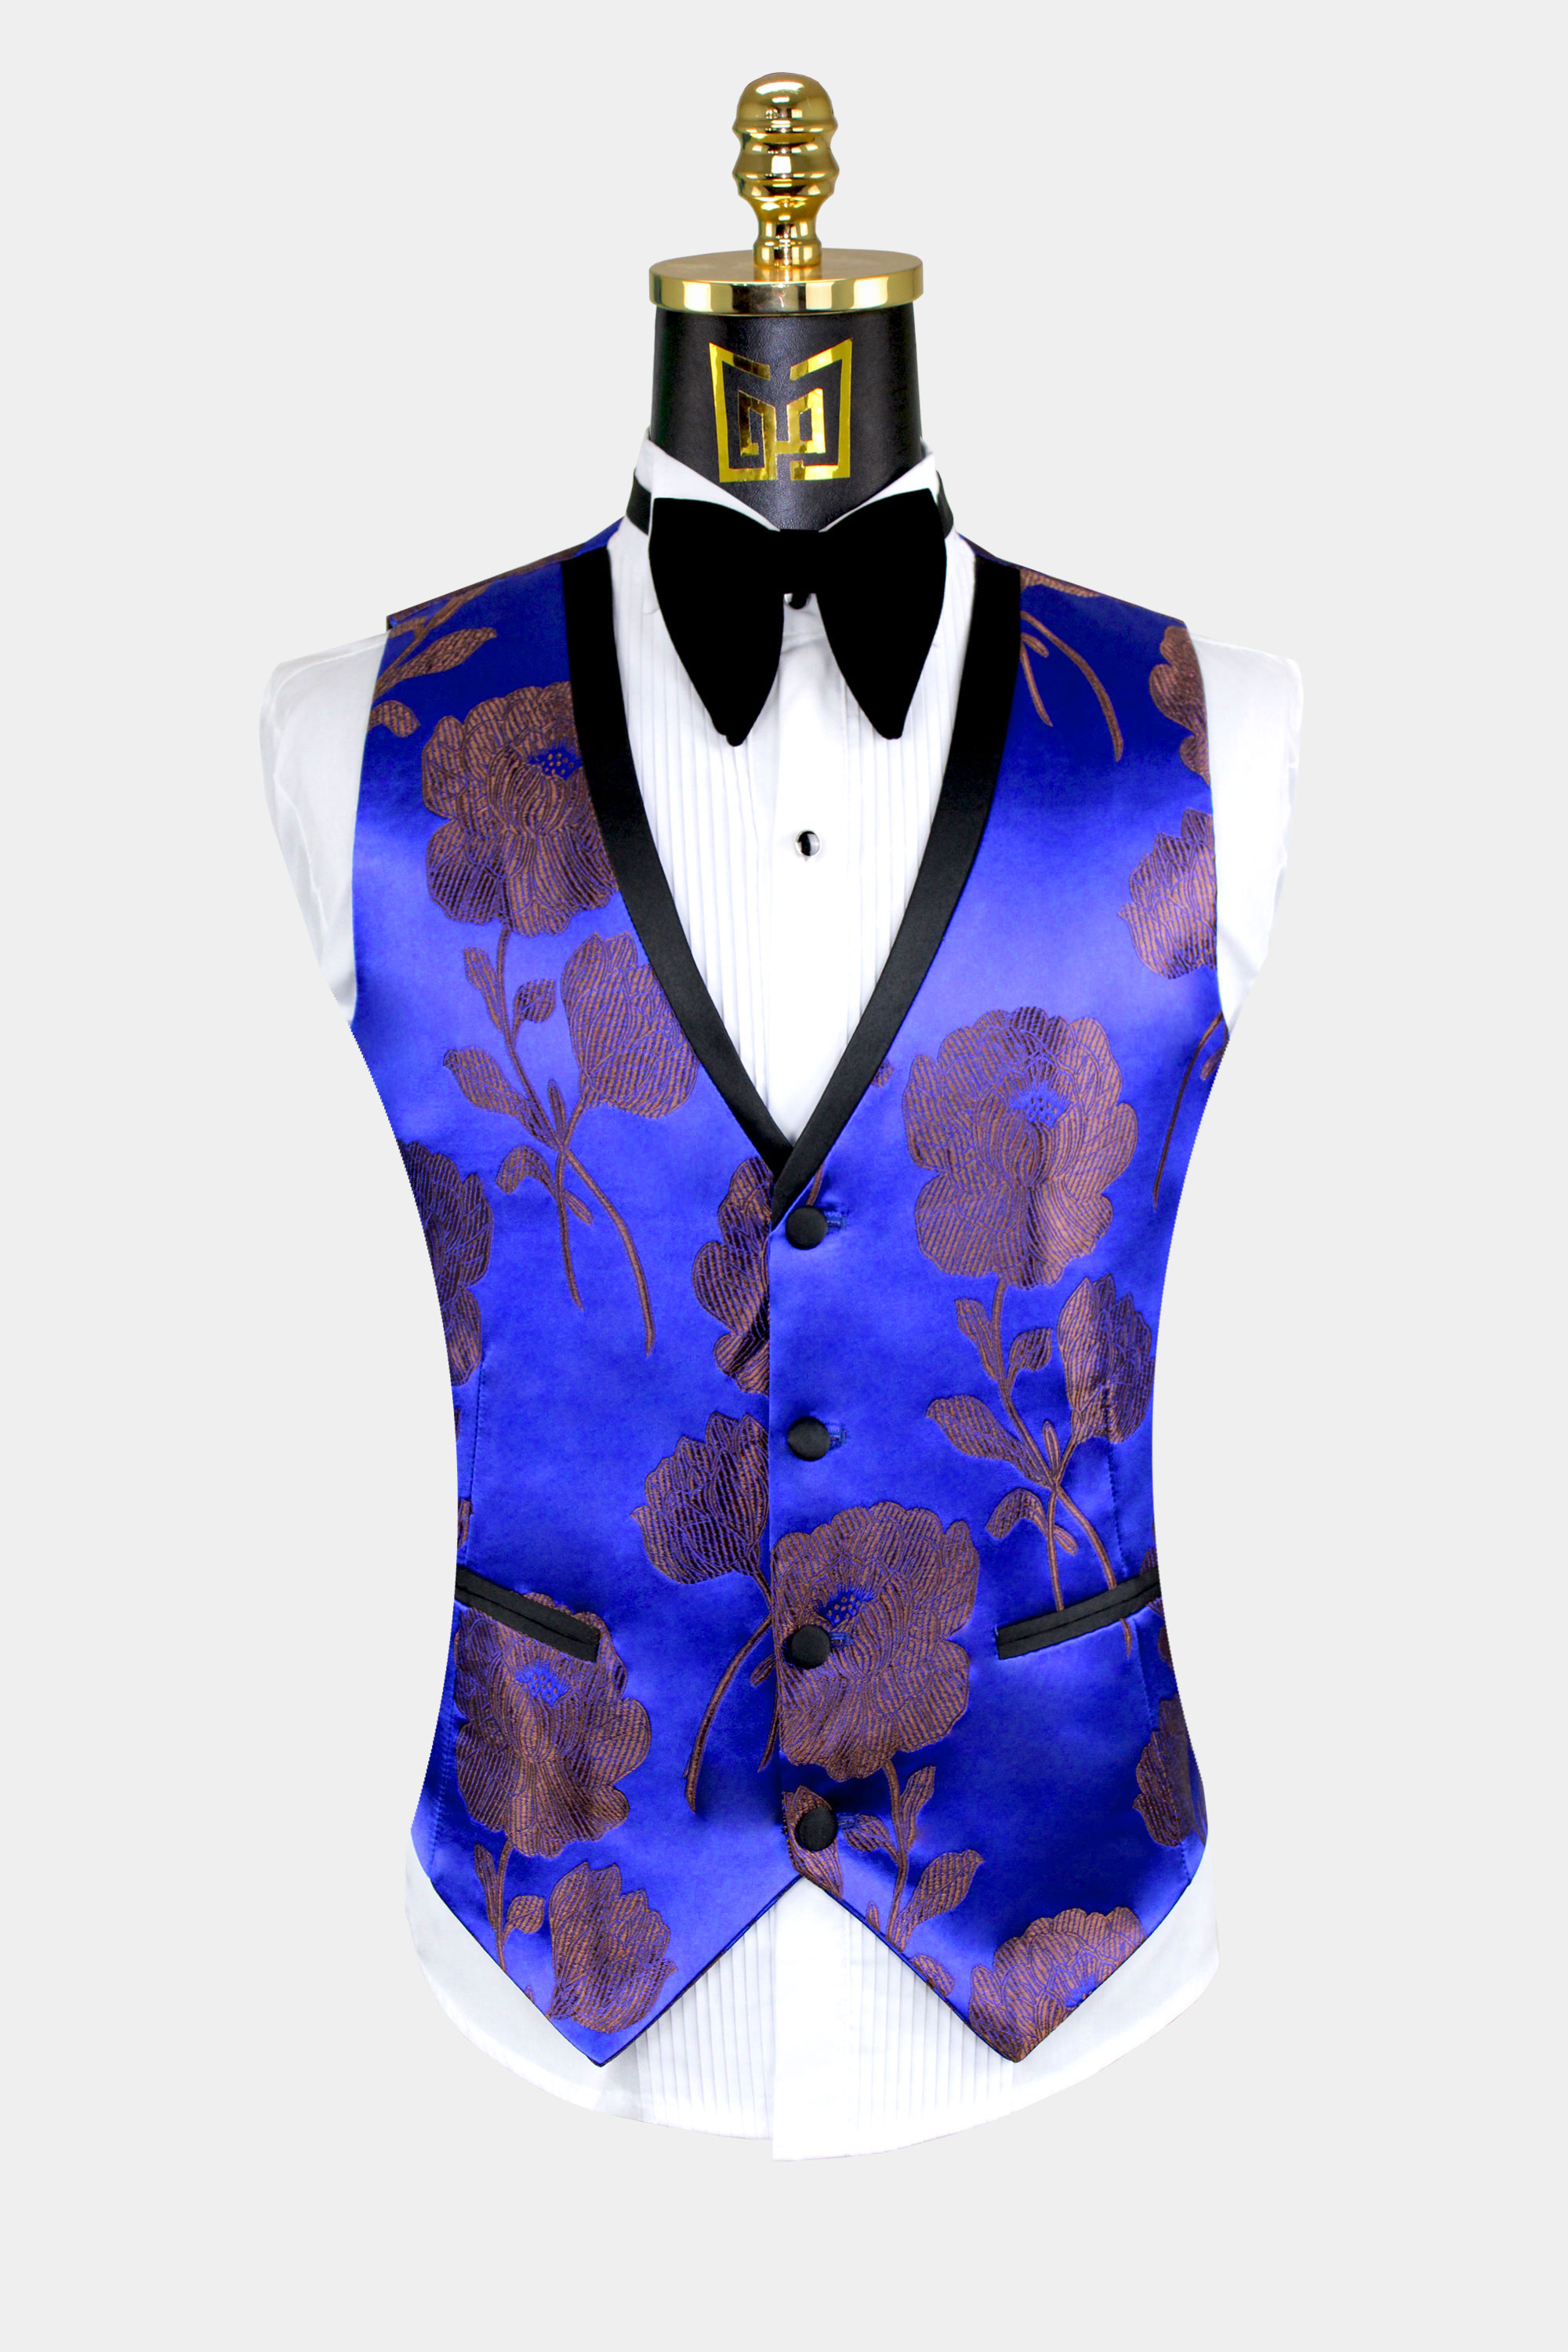 Mens-Royal-Blue-Floral-Tuxedo-Vest-from-Gentlemansgurur.com